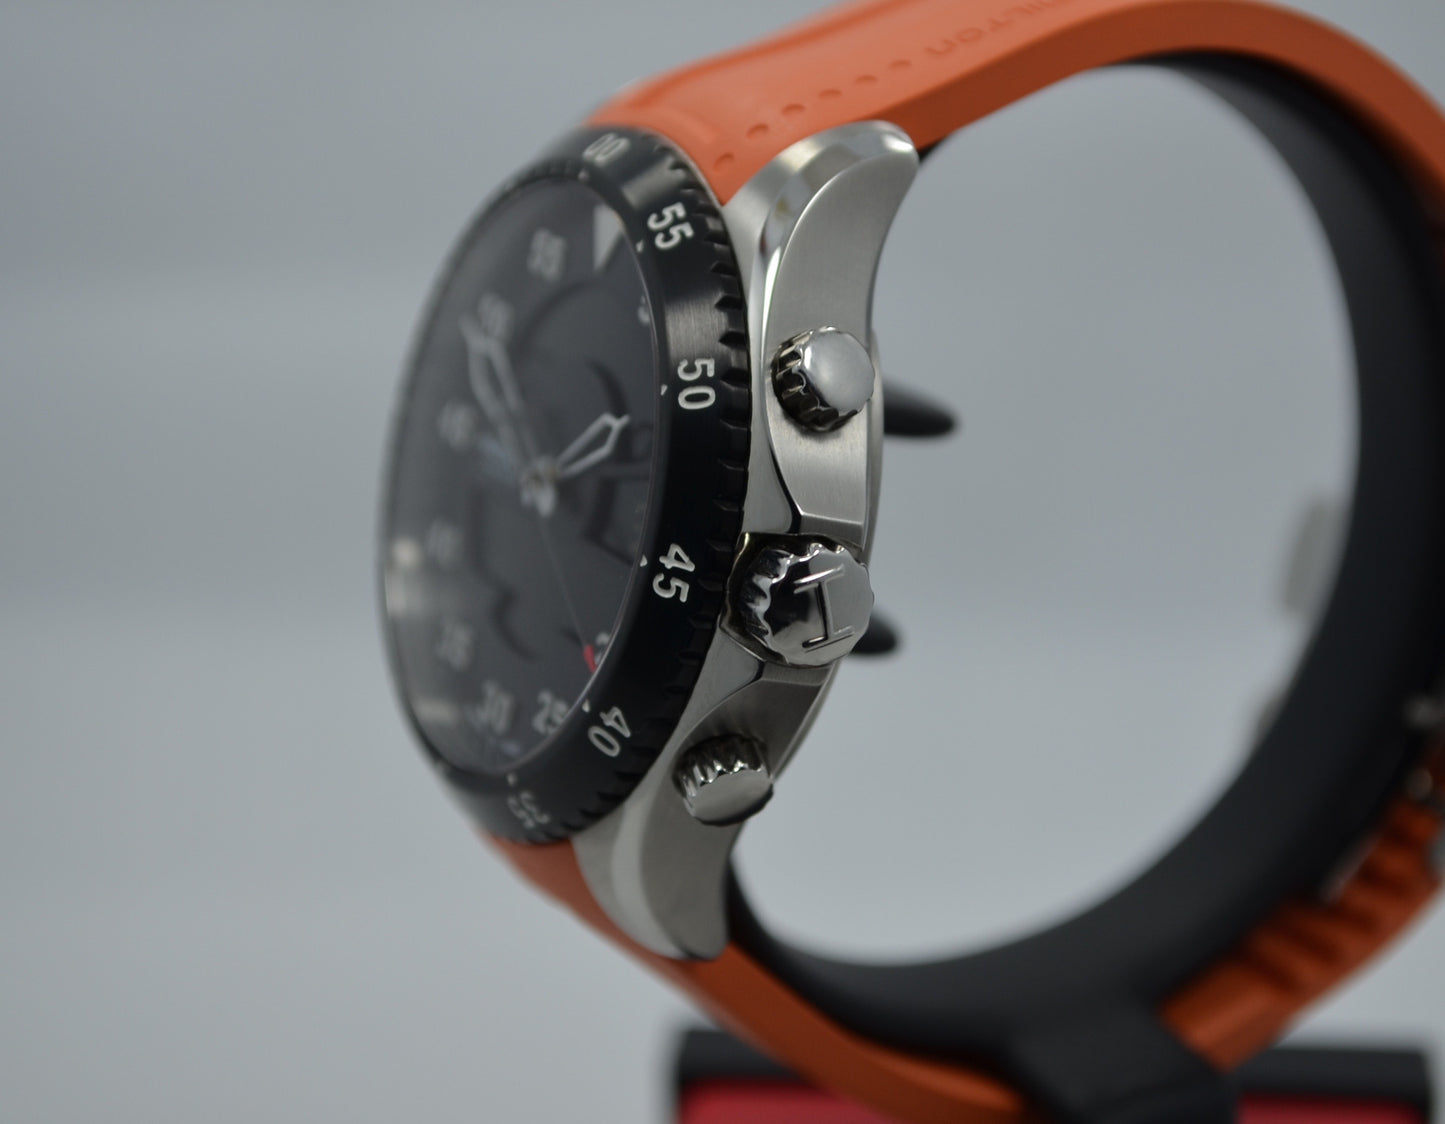 Hamilton Khaiki Pilot Air Zermatt H645540 Fight Timer Quartz Wristwatch - Hashtag Watch Company